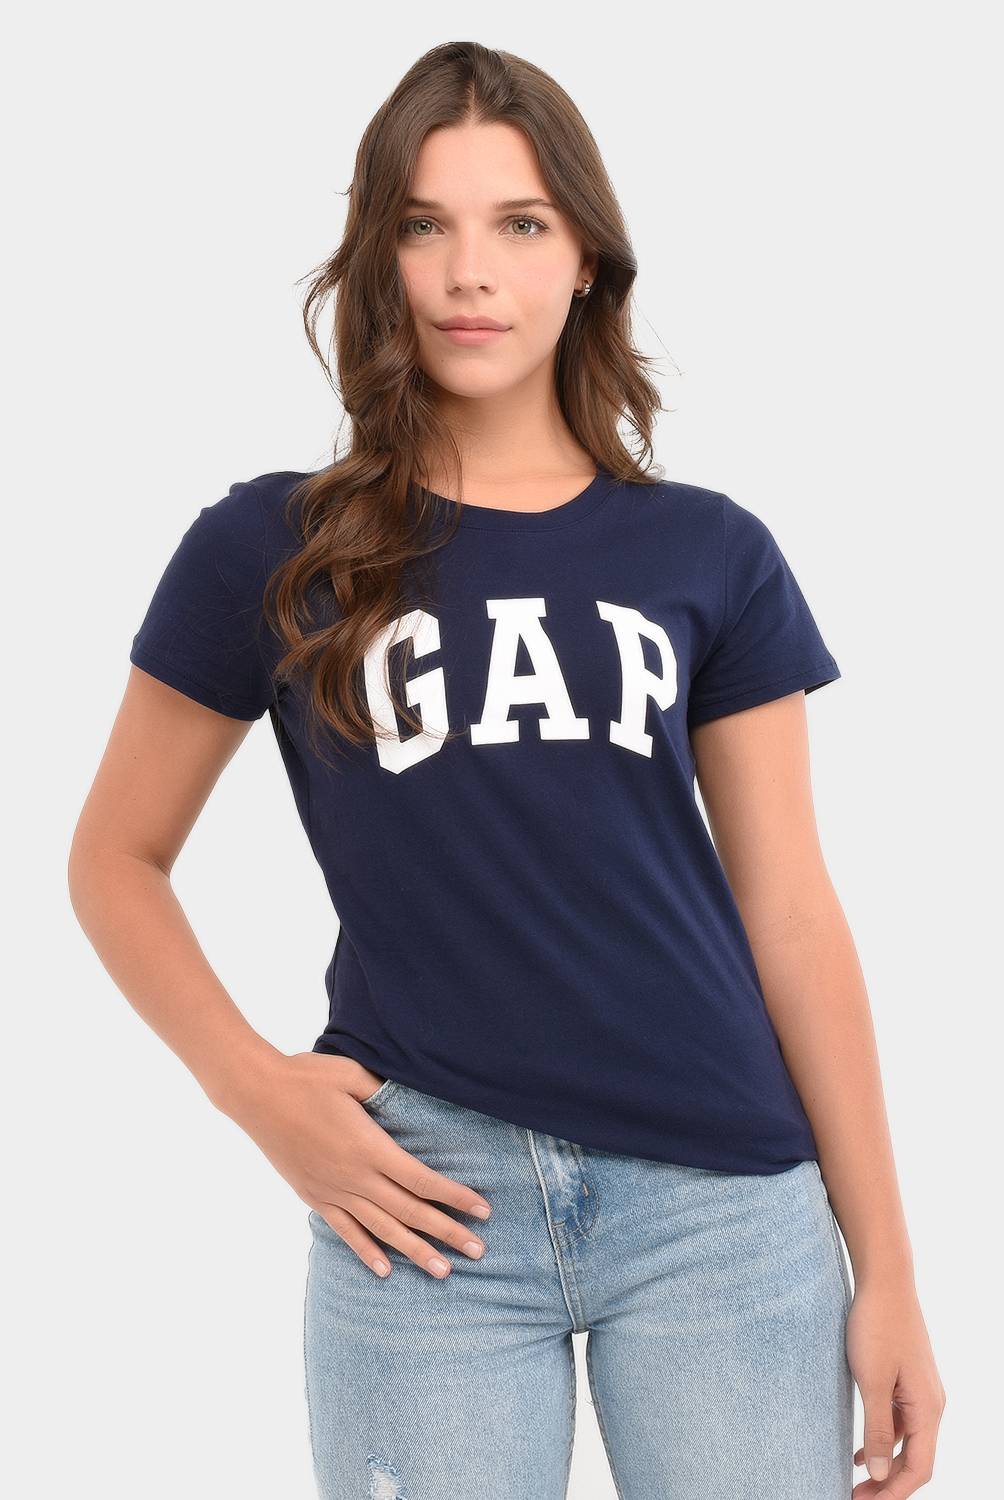 GAP - Camiseta Mujer Manga corta Gap